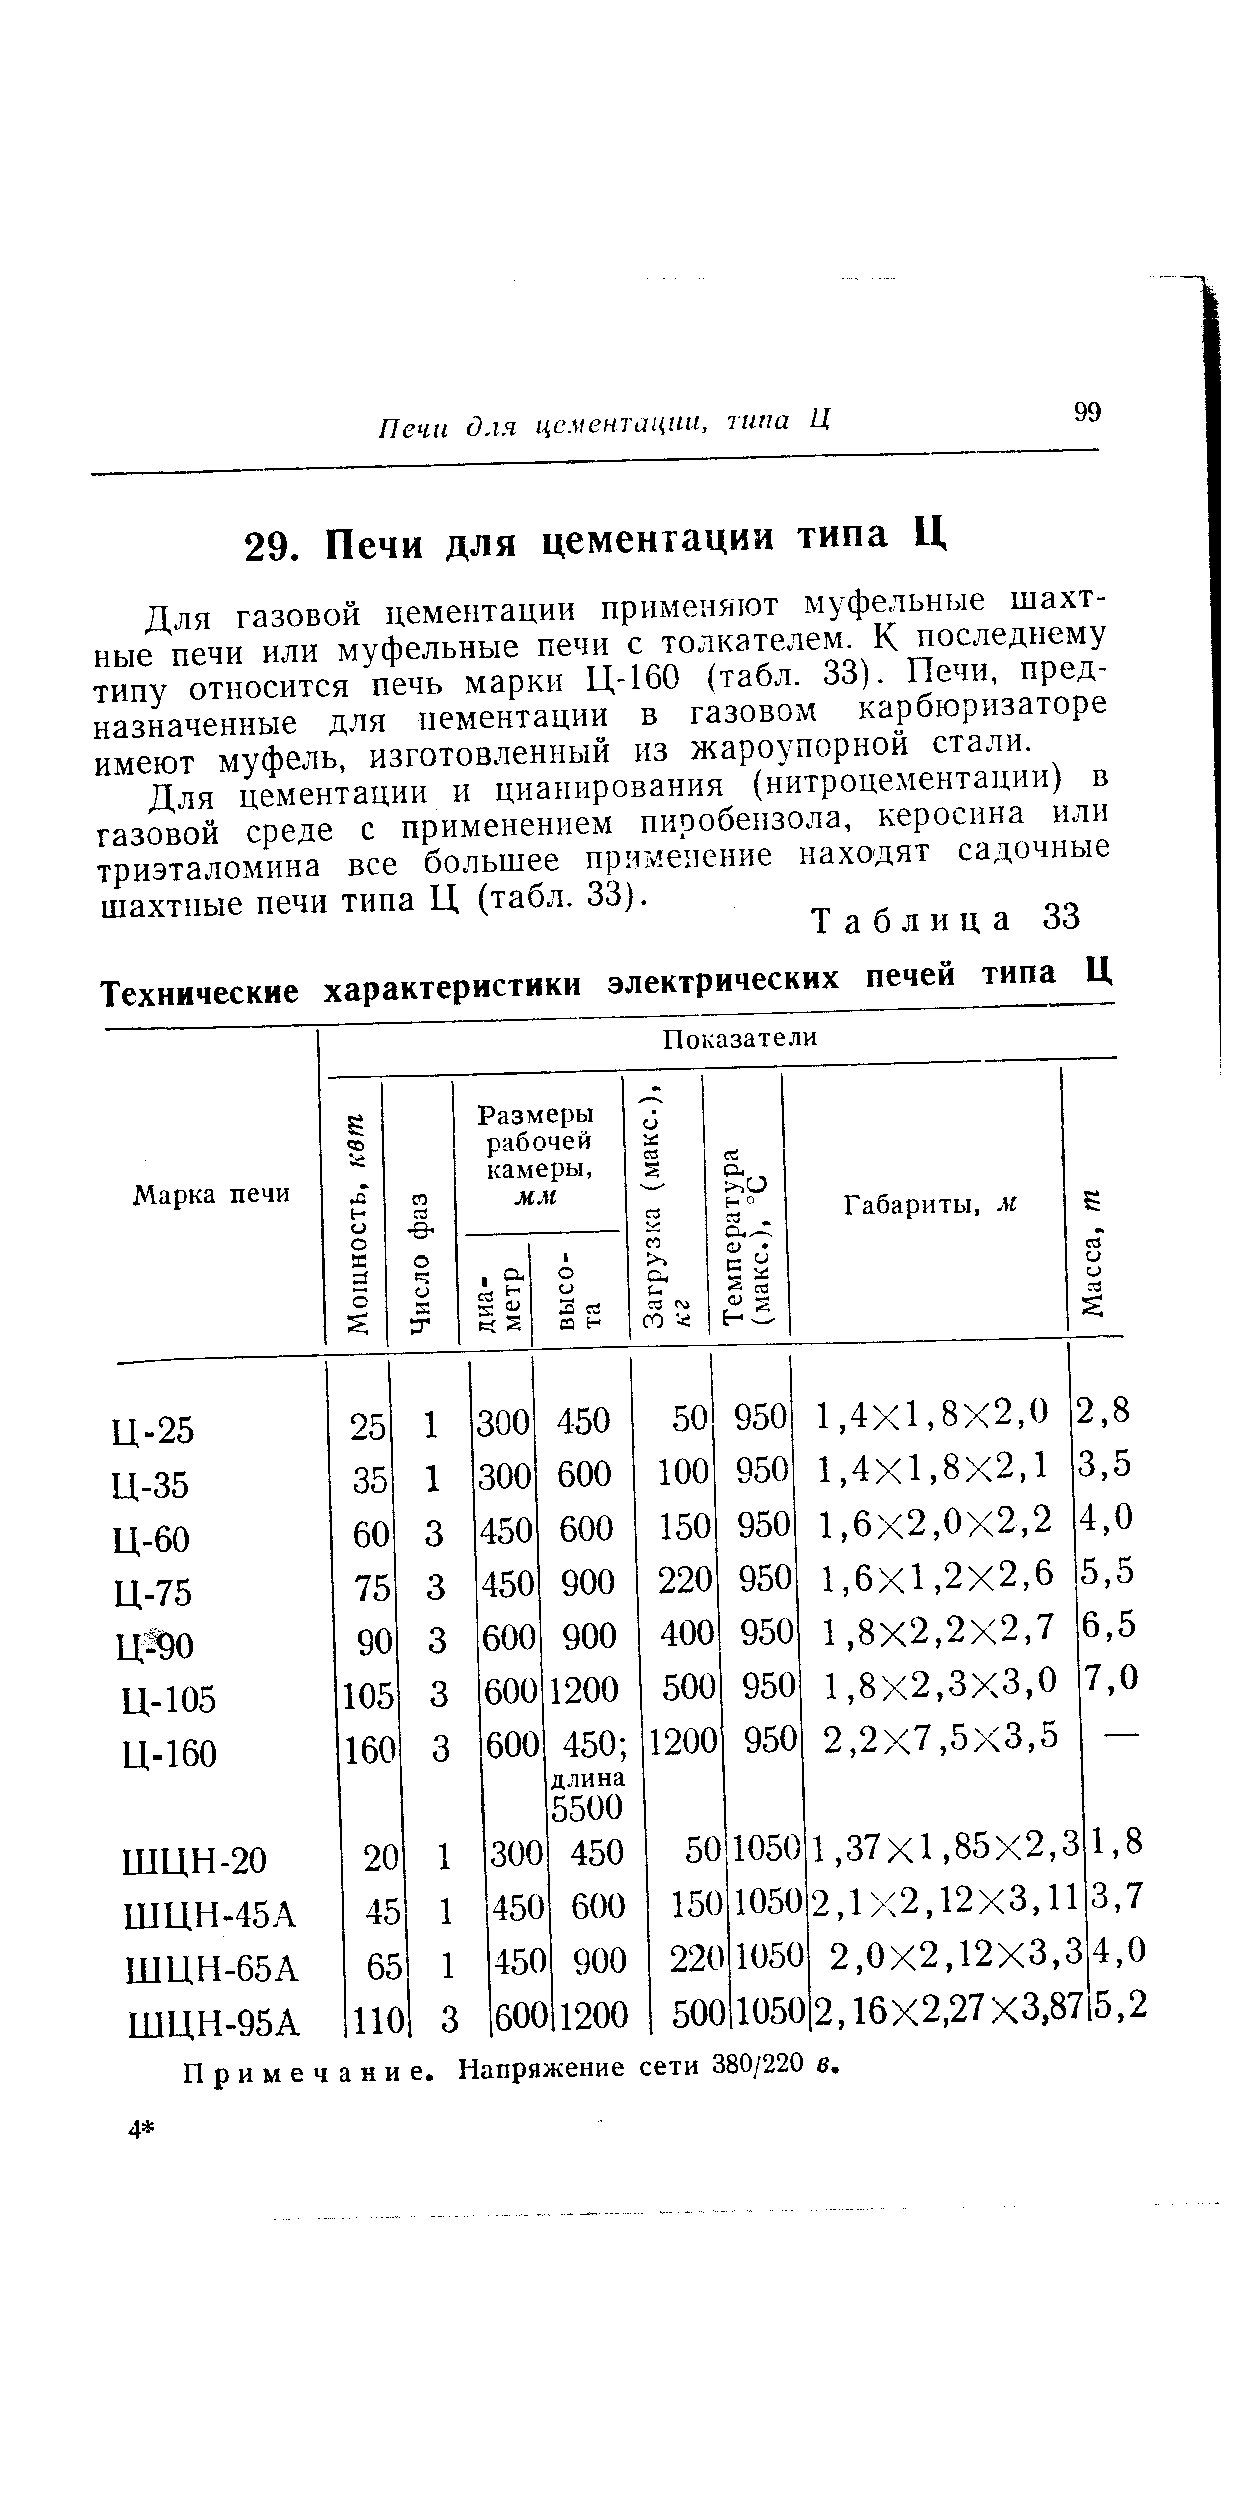 Таблица 33 Технические характеристики электрических печей типа Ц
